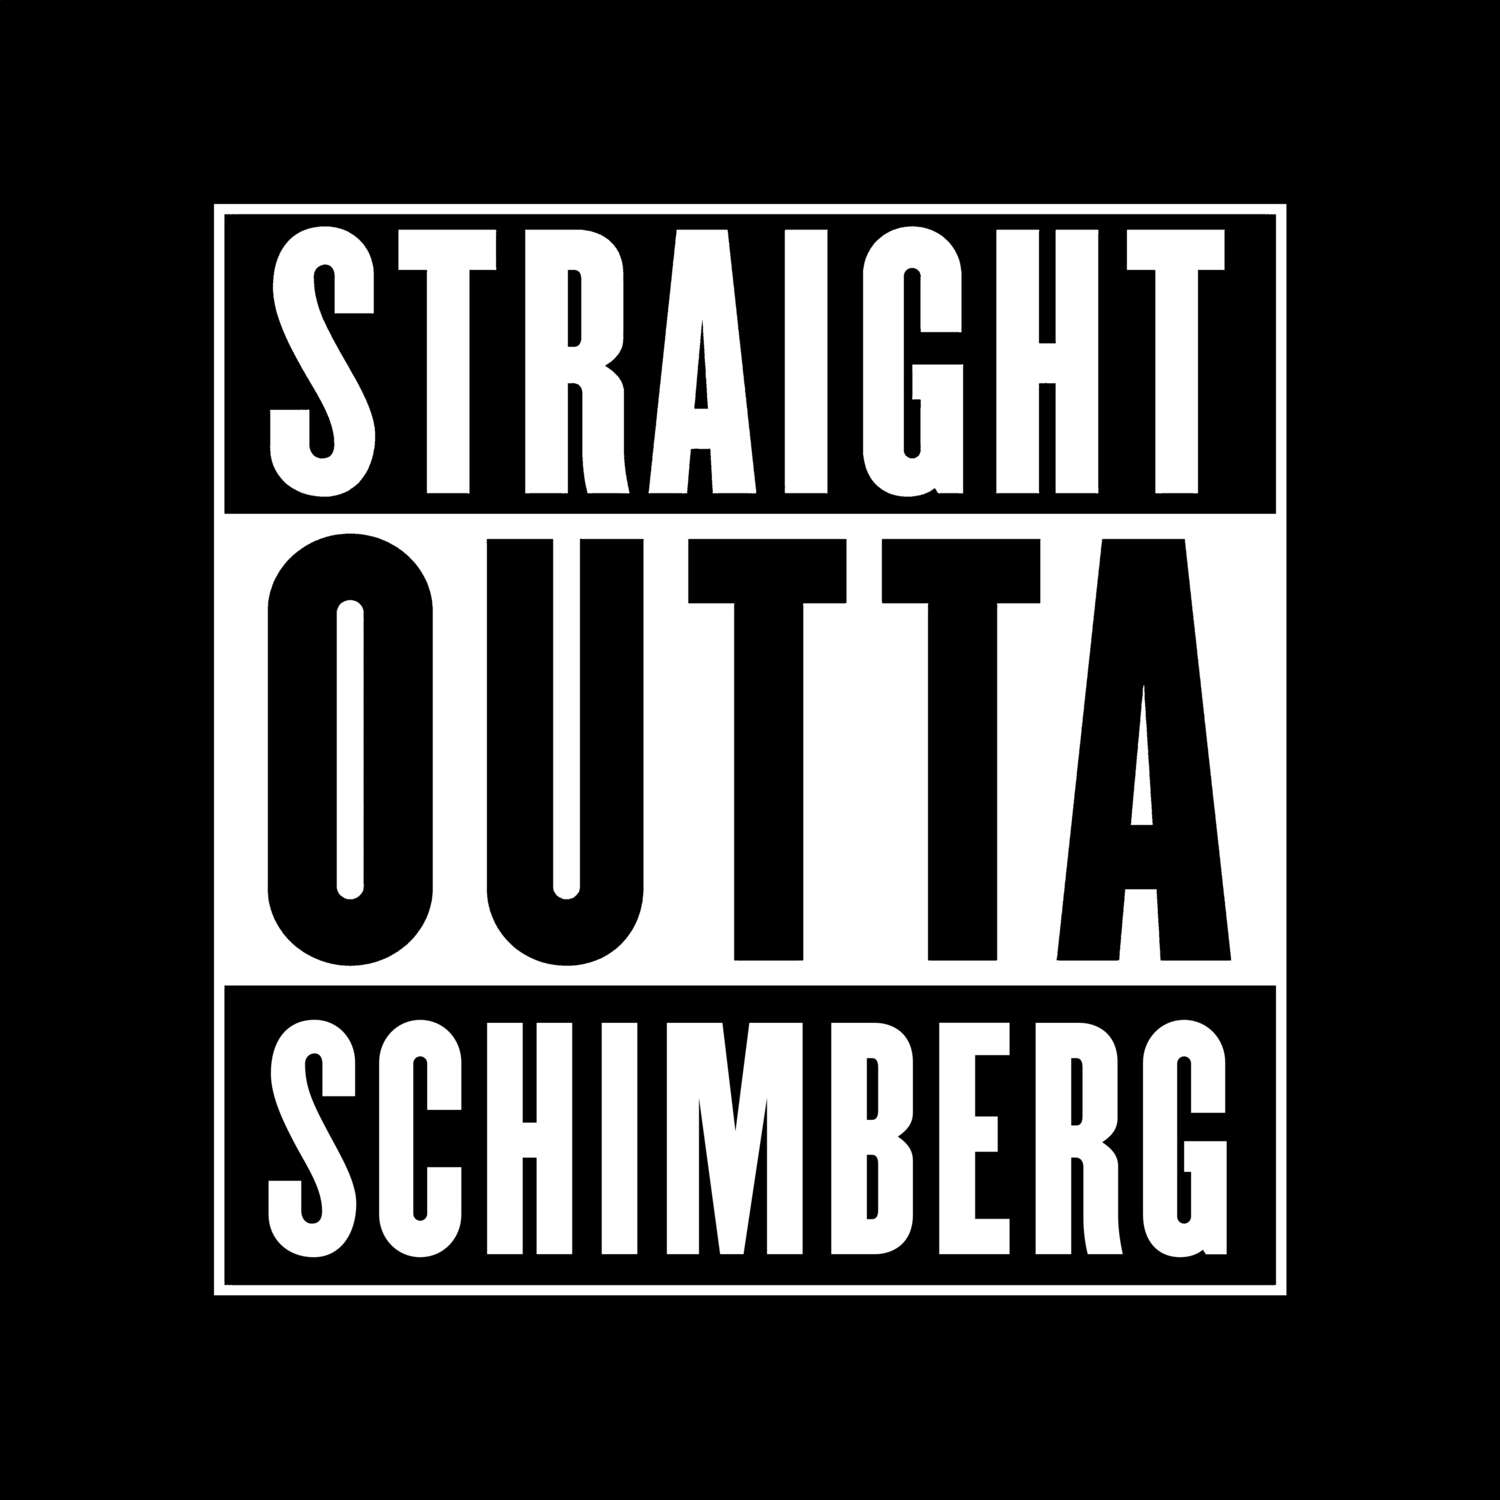 Schimberg T-Shirt »Straight Outta«